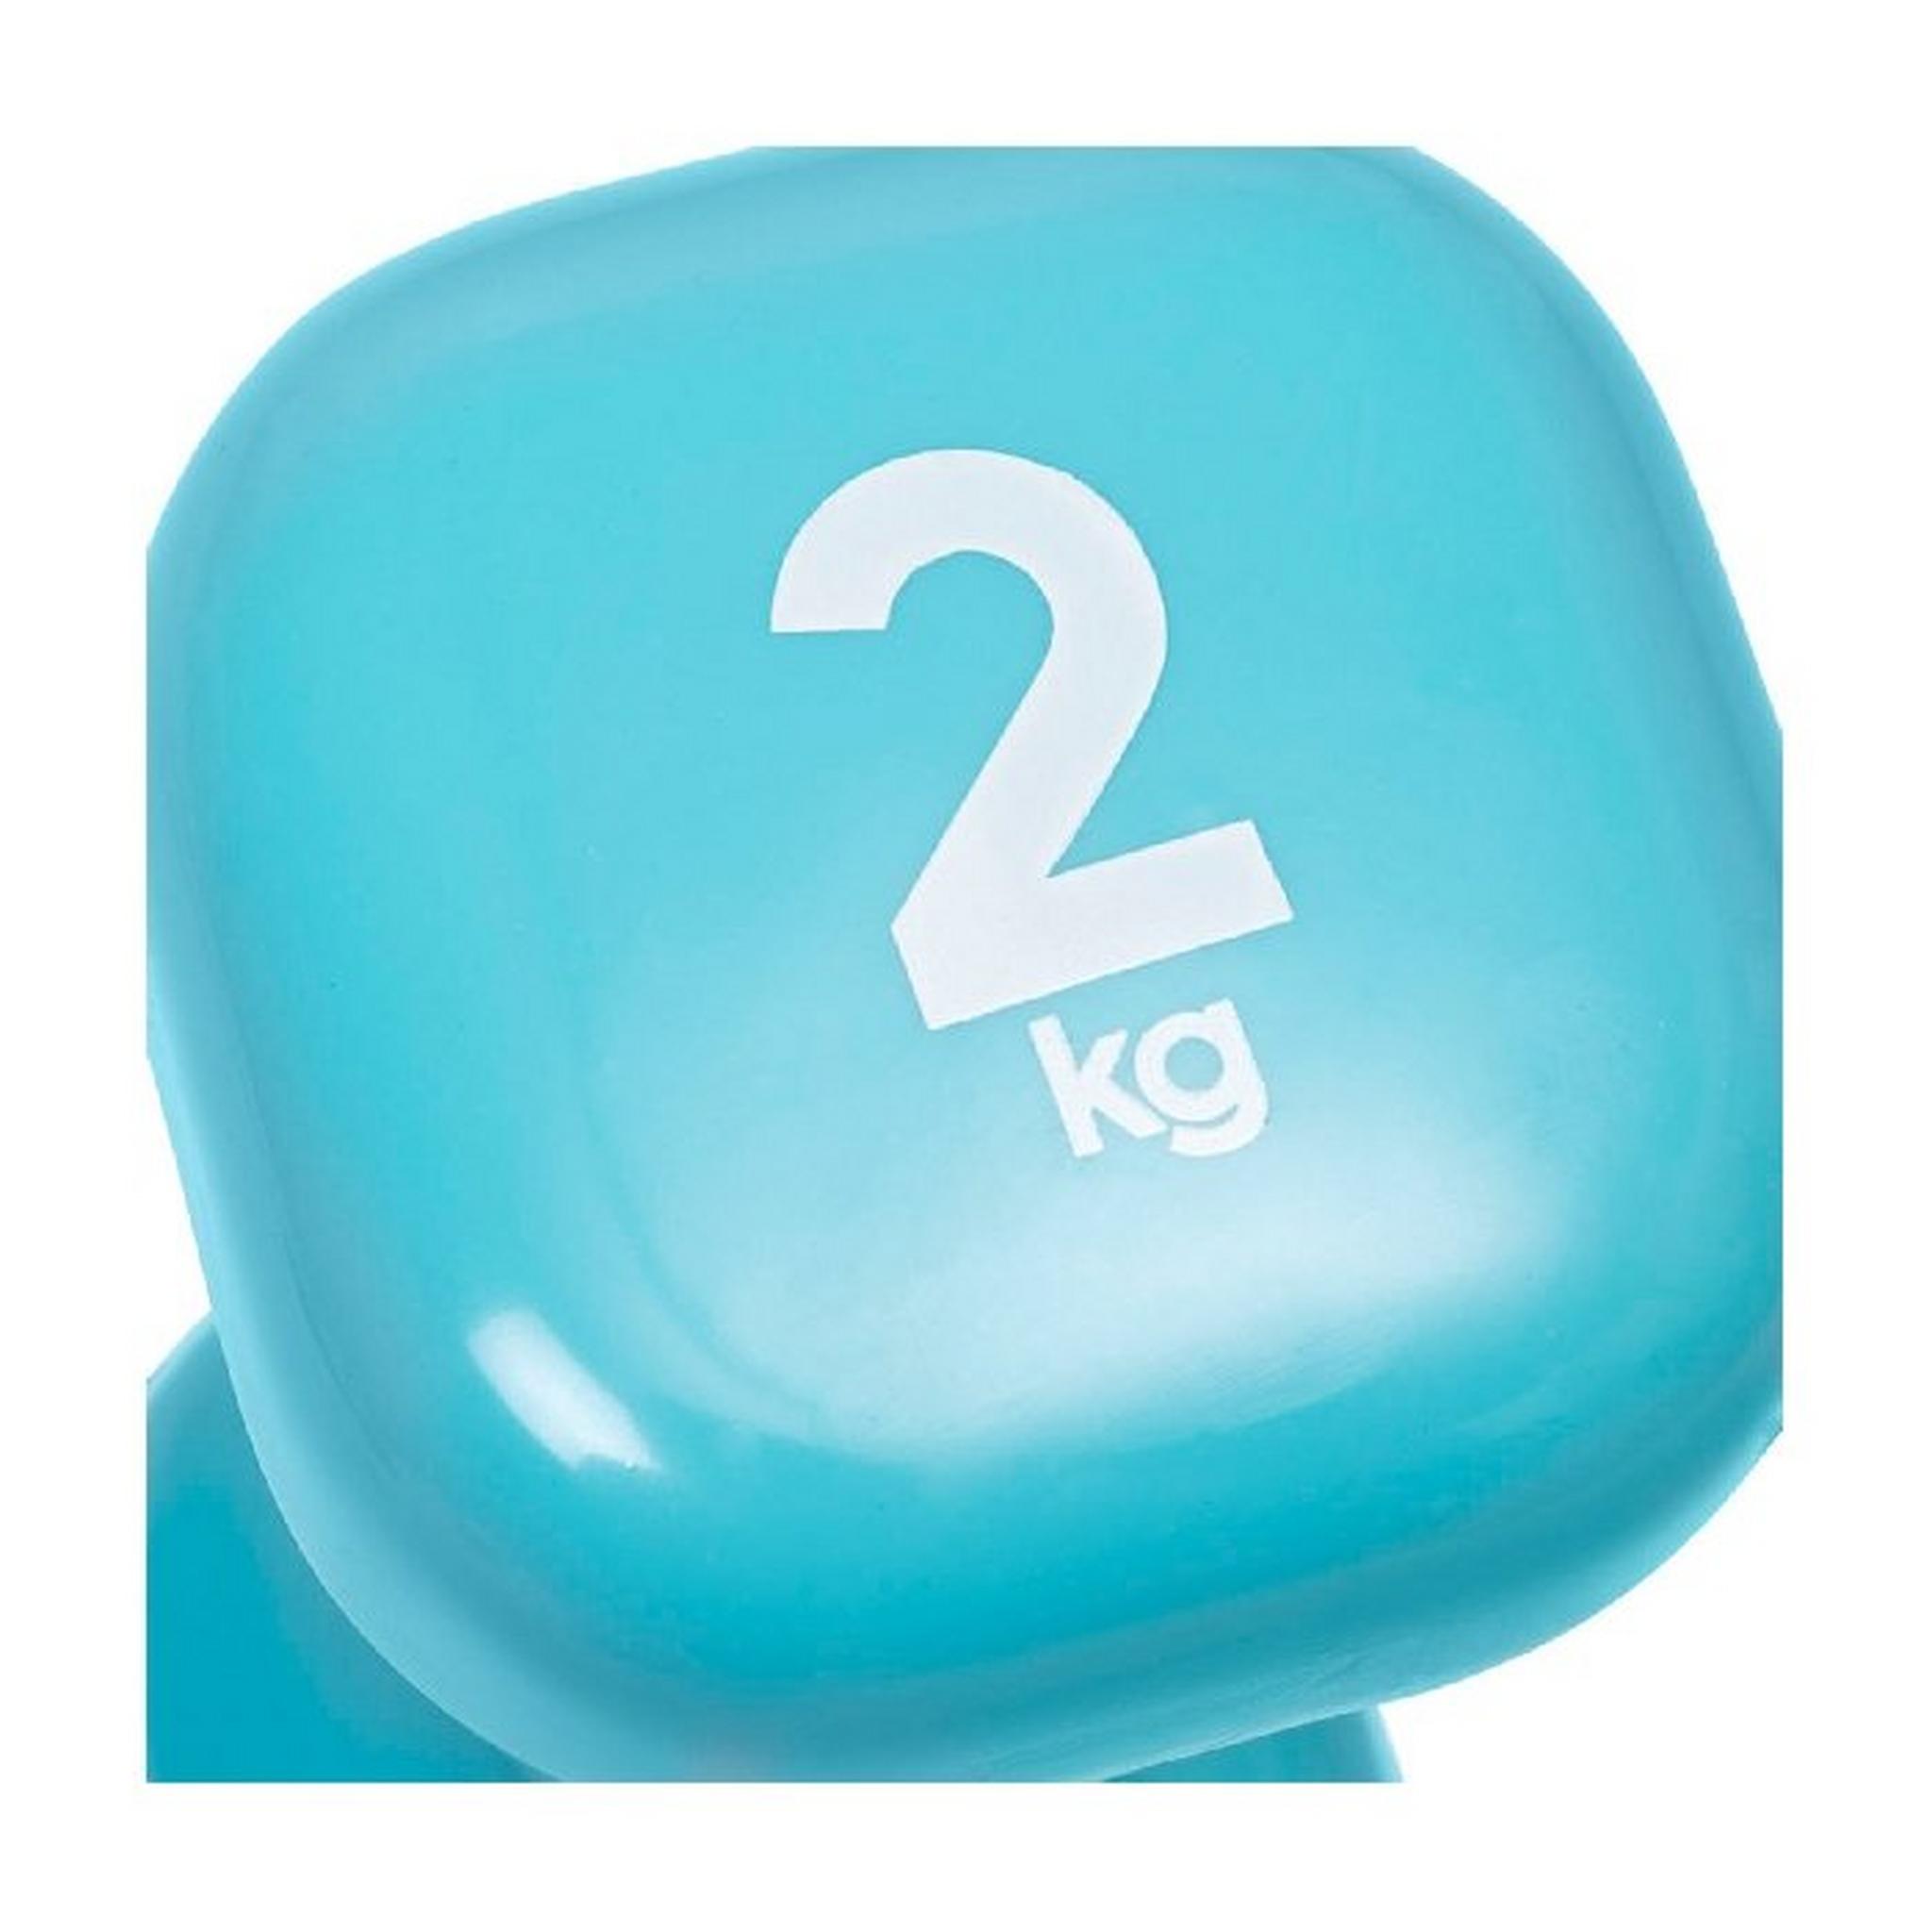 Reebok 2 KG Fixed Weight Dumbbell (RAWT-11152) - Blue